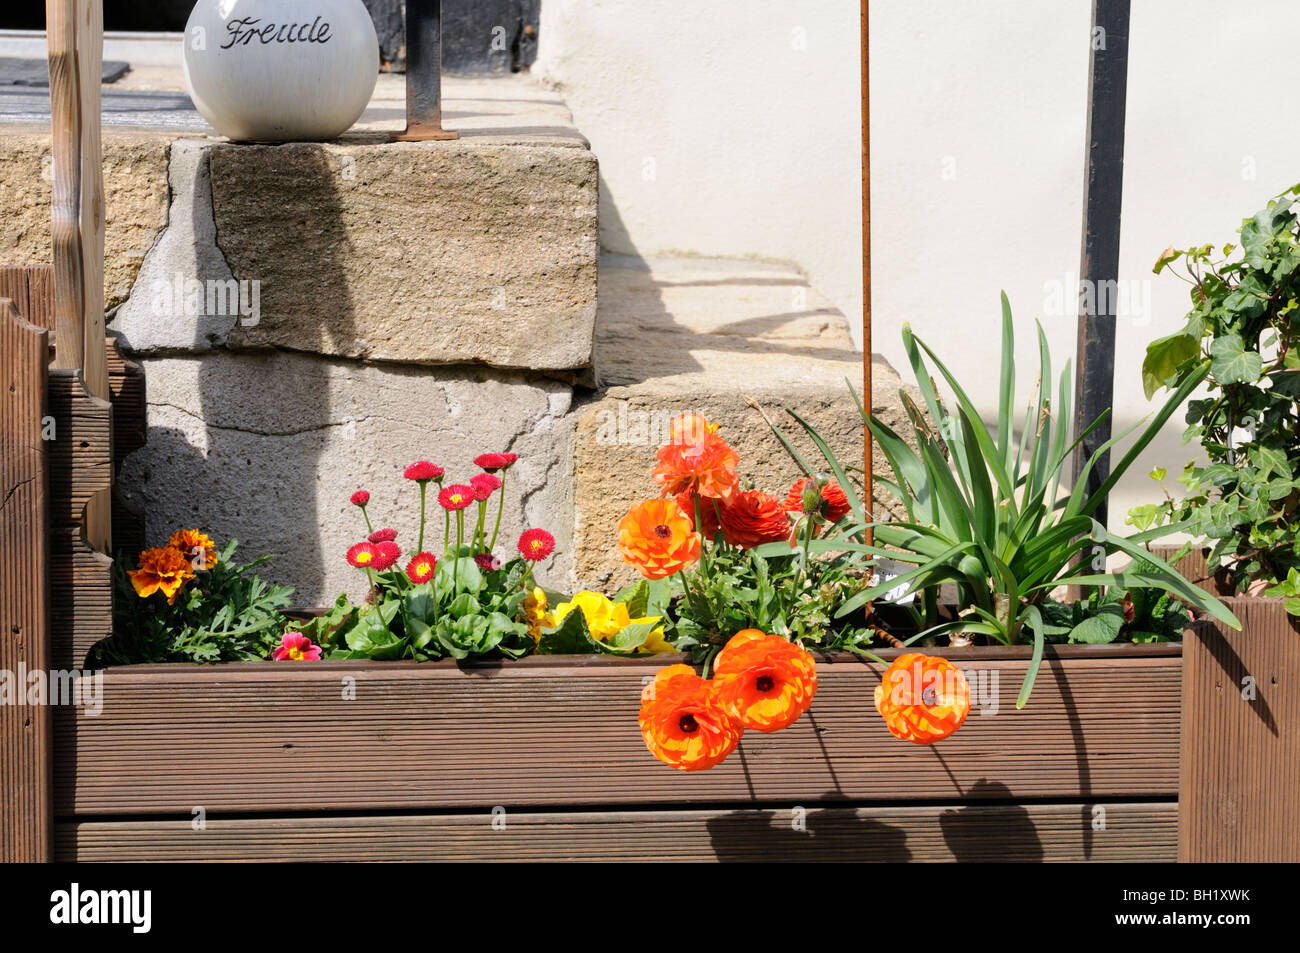 Blumenkasten mit Gänseblümchen, Primeln, Ranunkeln, Tagetes. - Flower box with daisies, primroses, ranunculuses, marigolds. Stock Photo